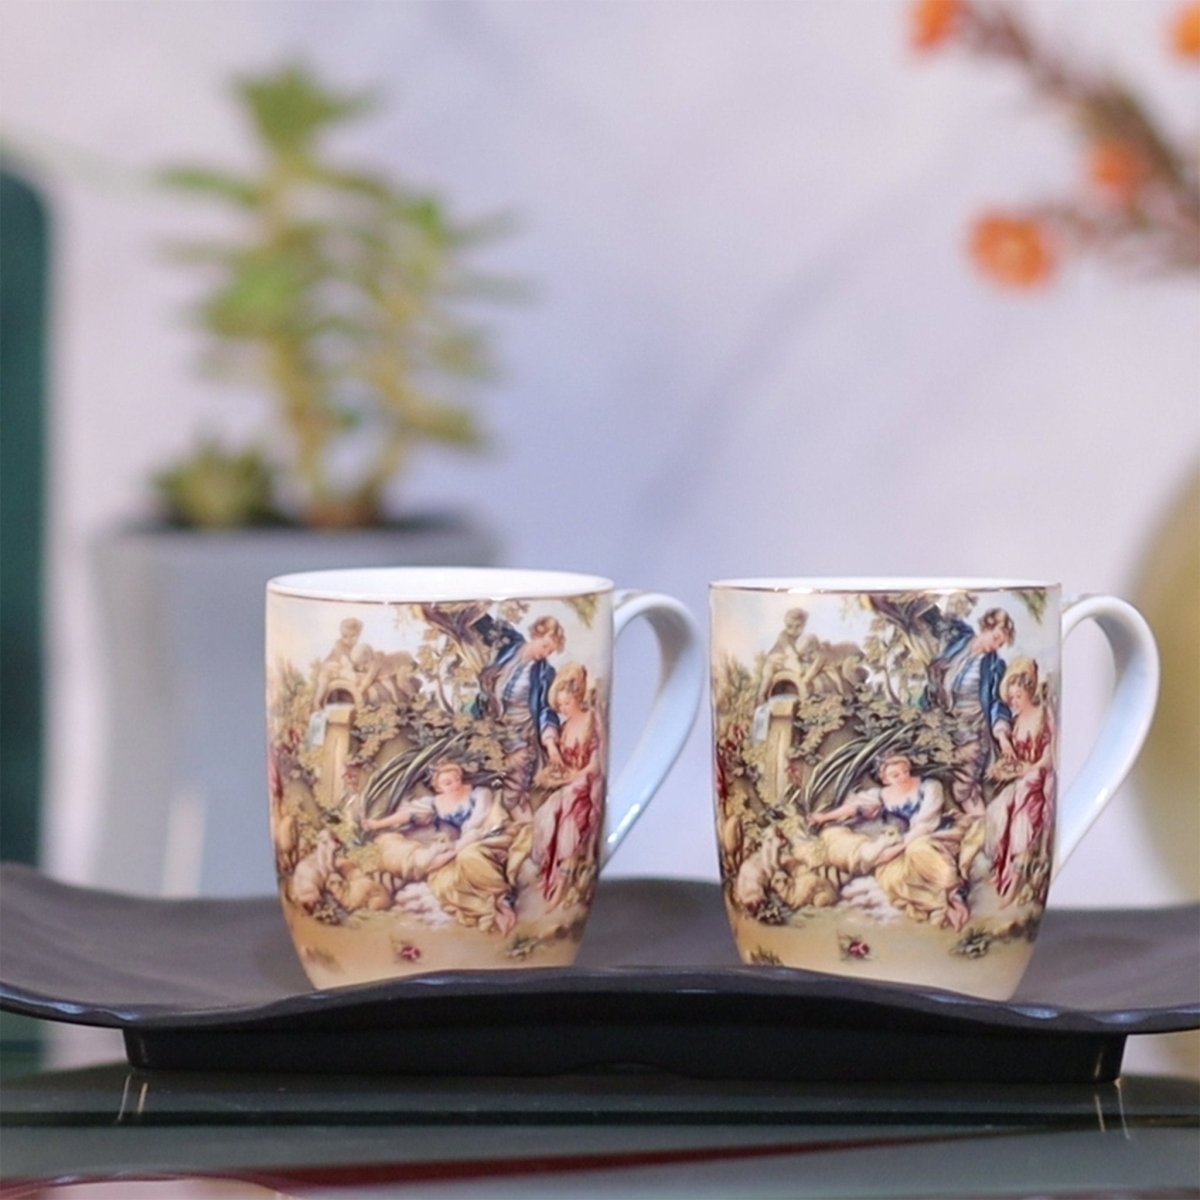 Ceramic Vintage Victorian Print - 6 Pc Mug Set Serves as Tea Cups, Coffee Cups, Tea Mugs, Coffee Mugs - Kezevel